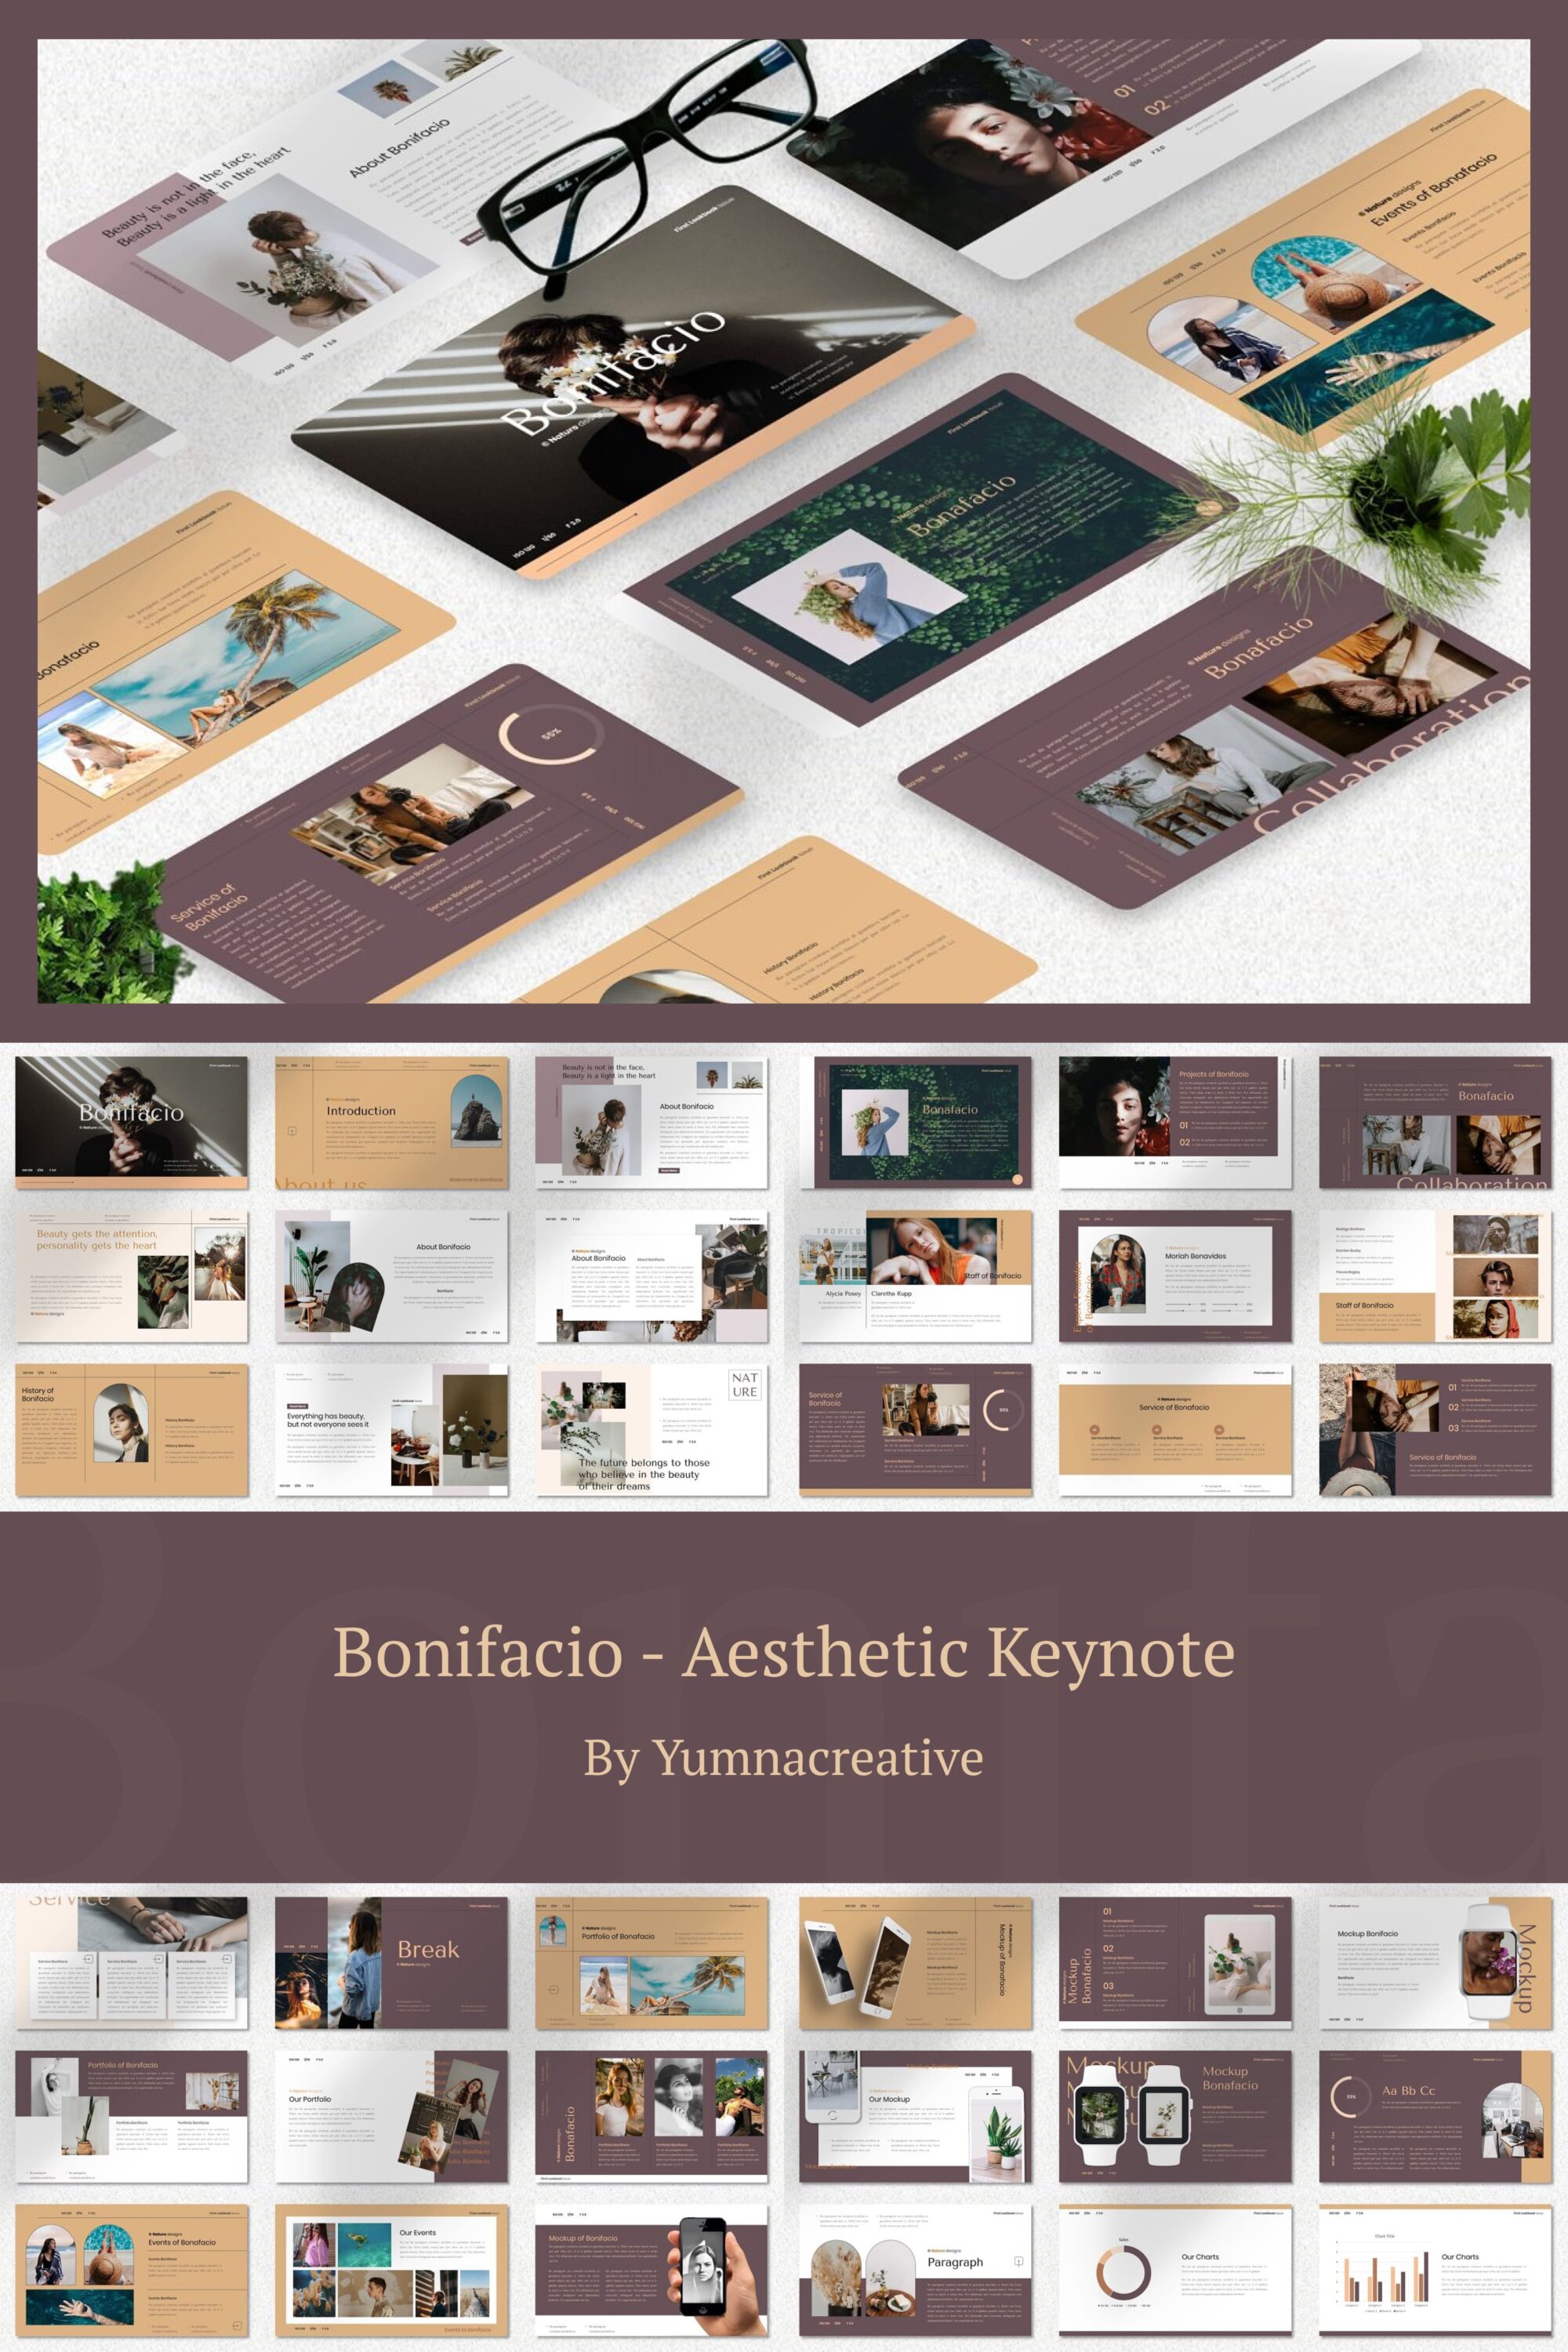 Bonifacio aesthetic keynote - Pinterest image preview.